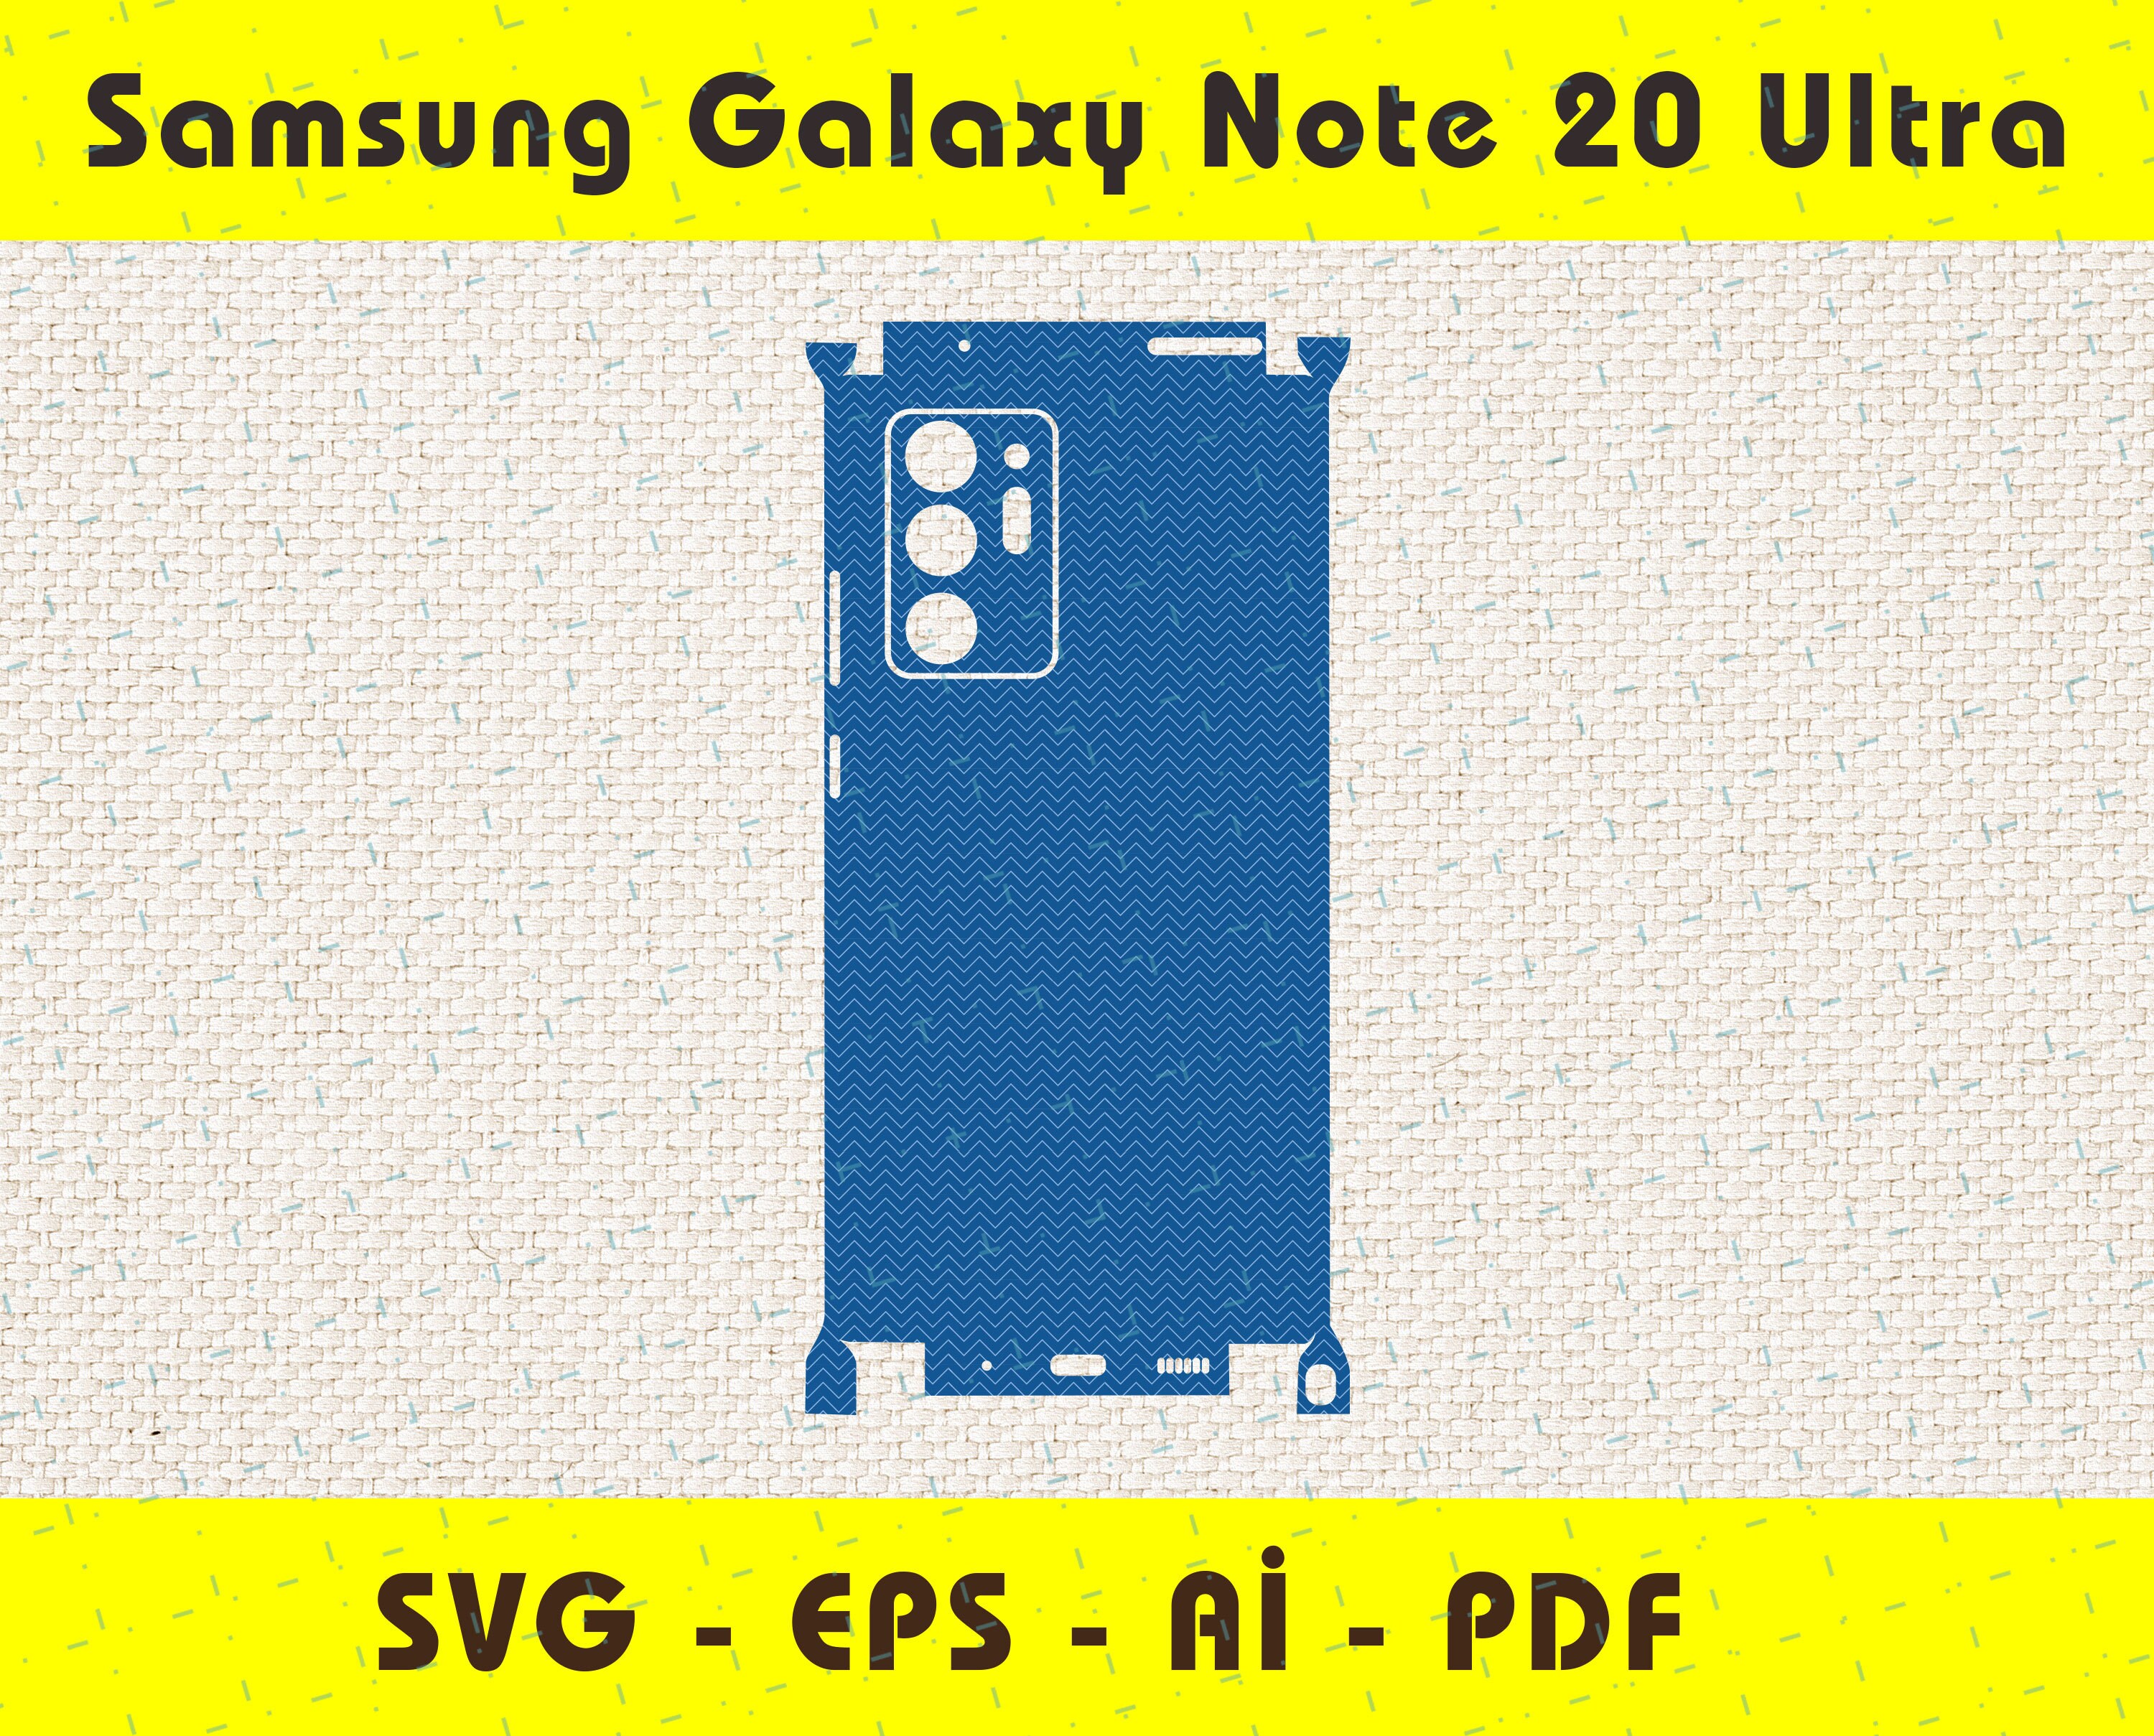 Samsung Galaxy Vector Hd Images, Samsung Galaxy Note20 Ultra